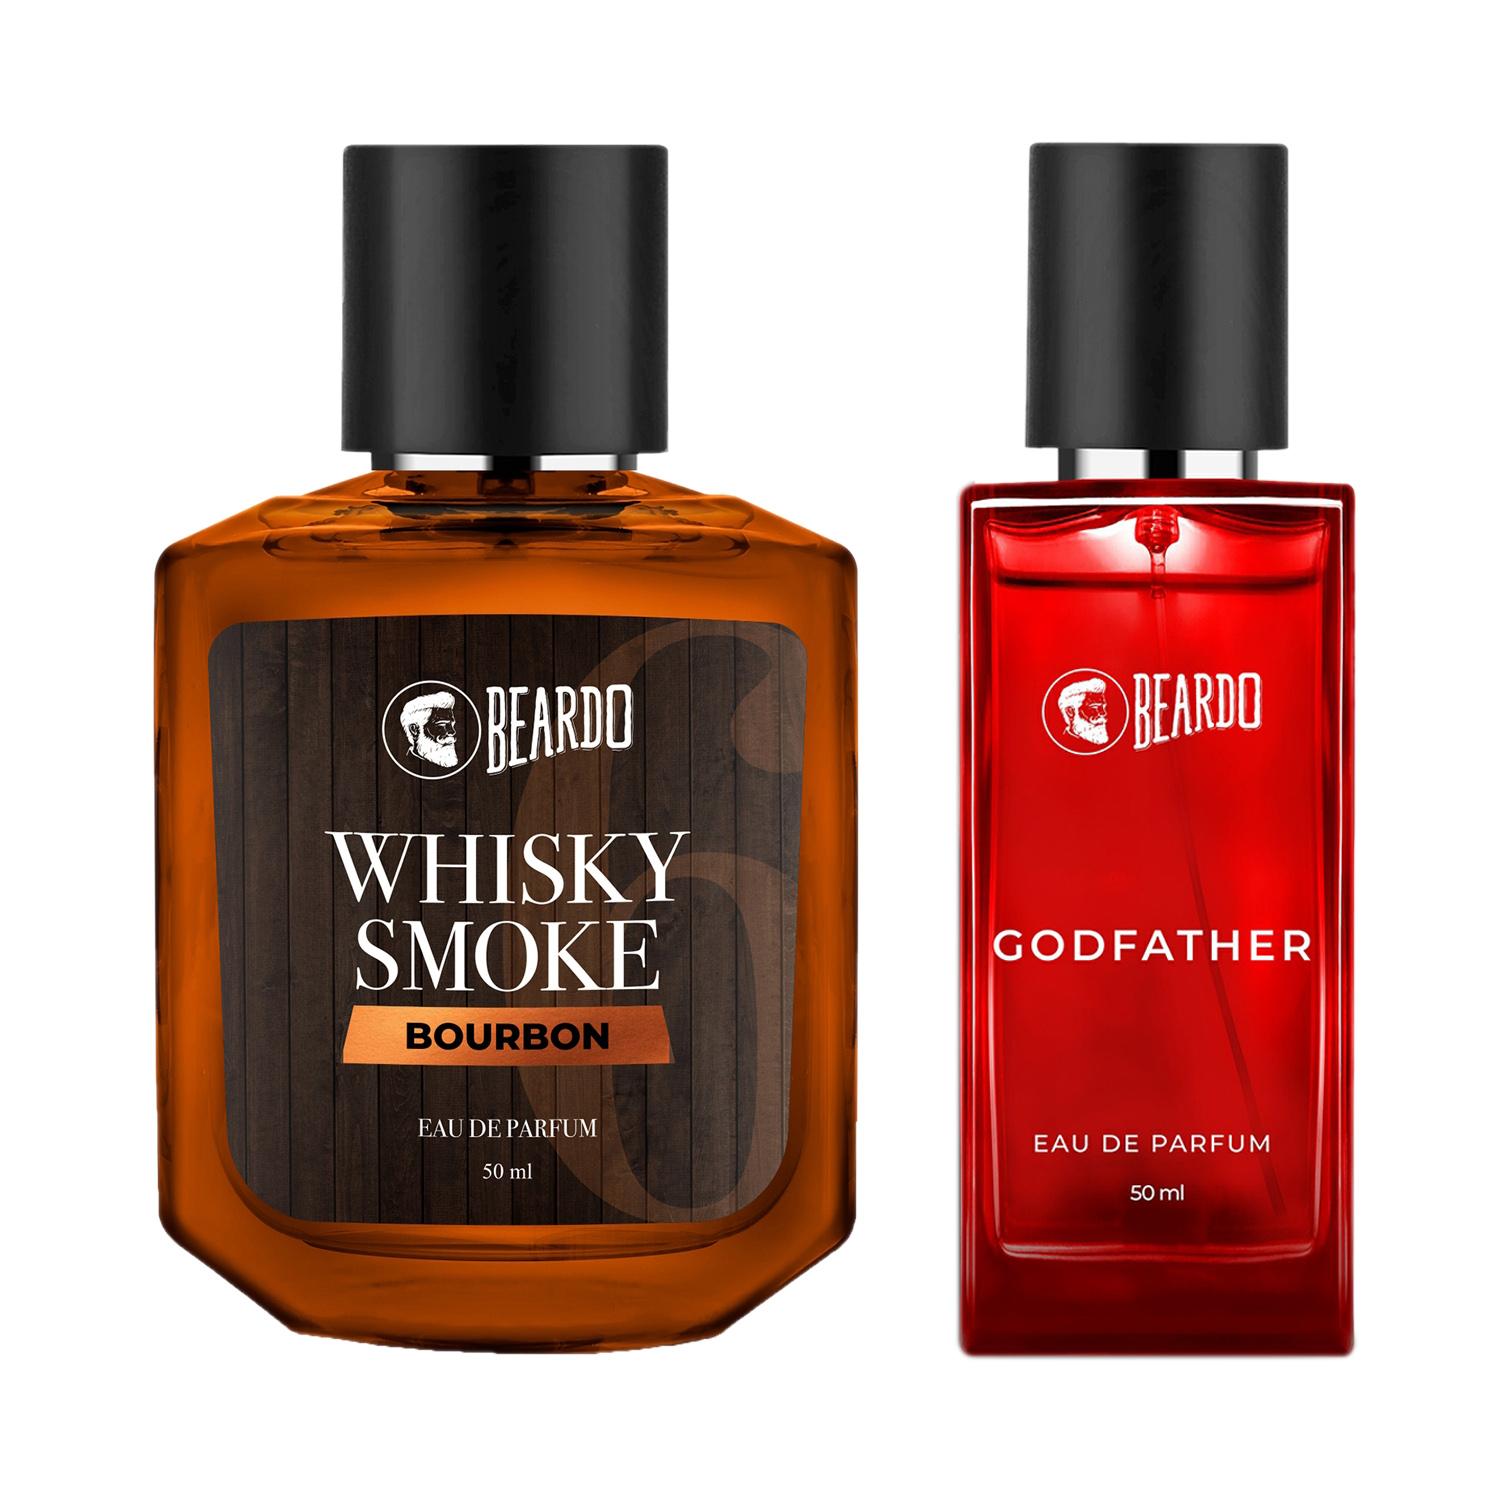 Beardo | Beardo Whiskey Smoke Bourbon Perfume EDP 50ml, GodFather Perfume (50ml) (Set of 2) Combo